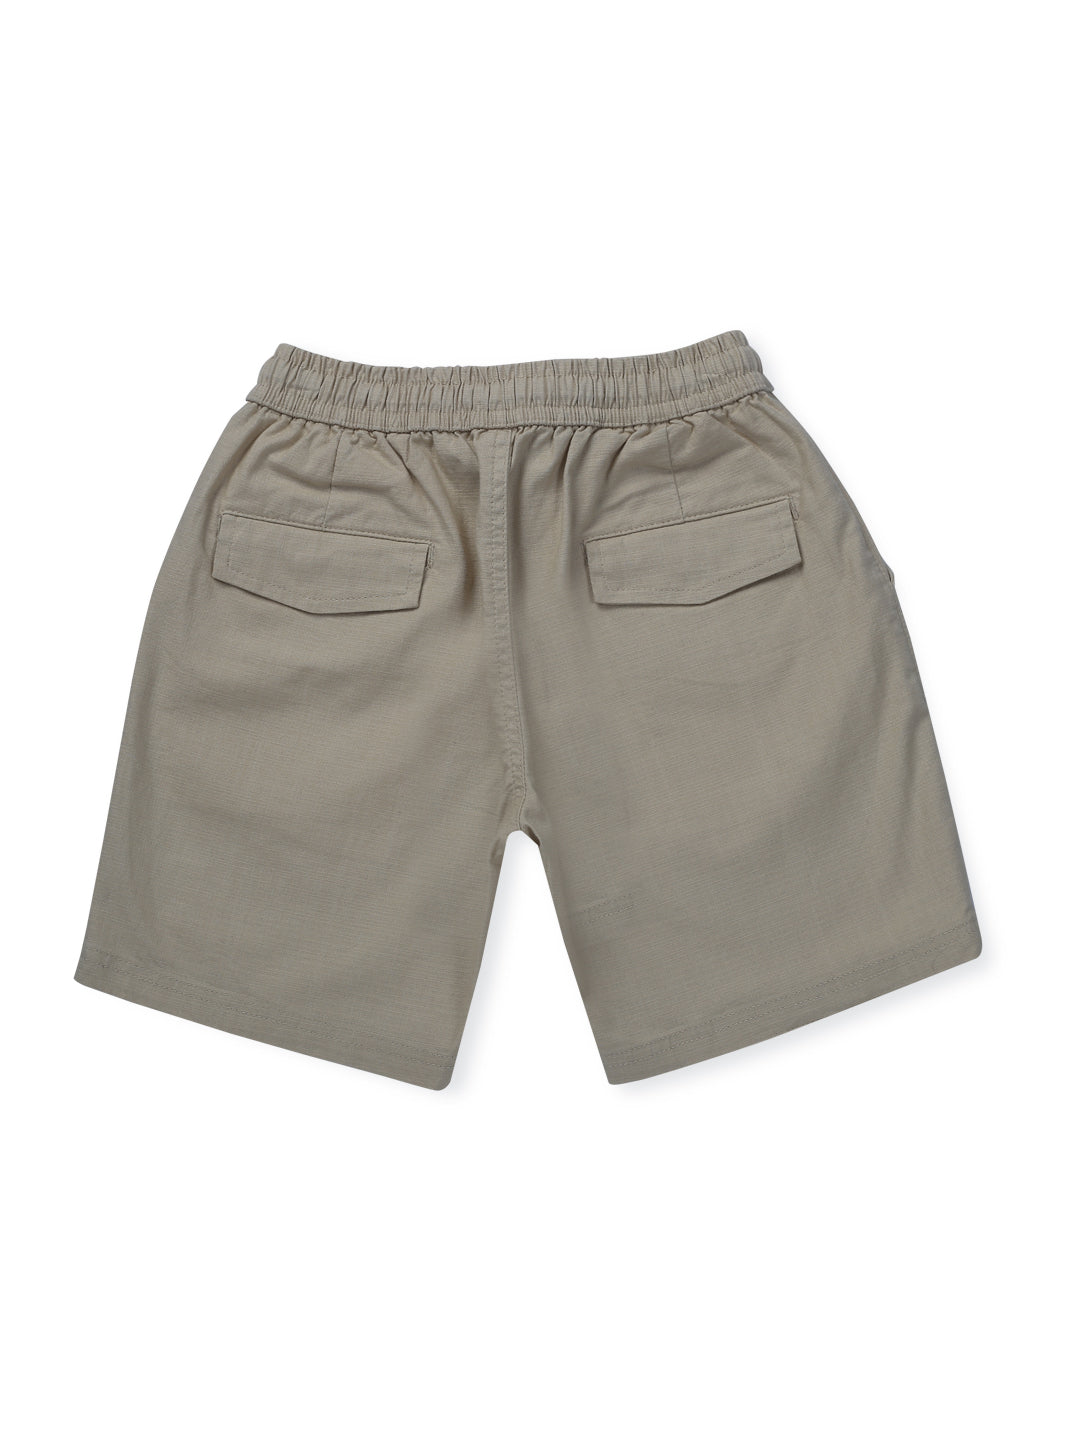 Boys Khaki Cotton Solid Shorts